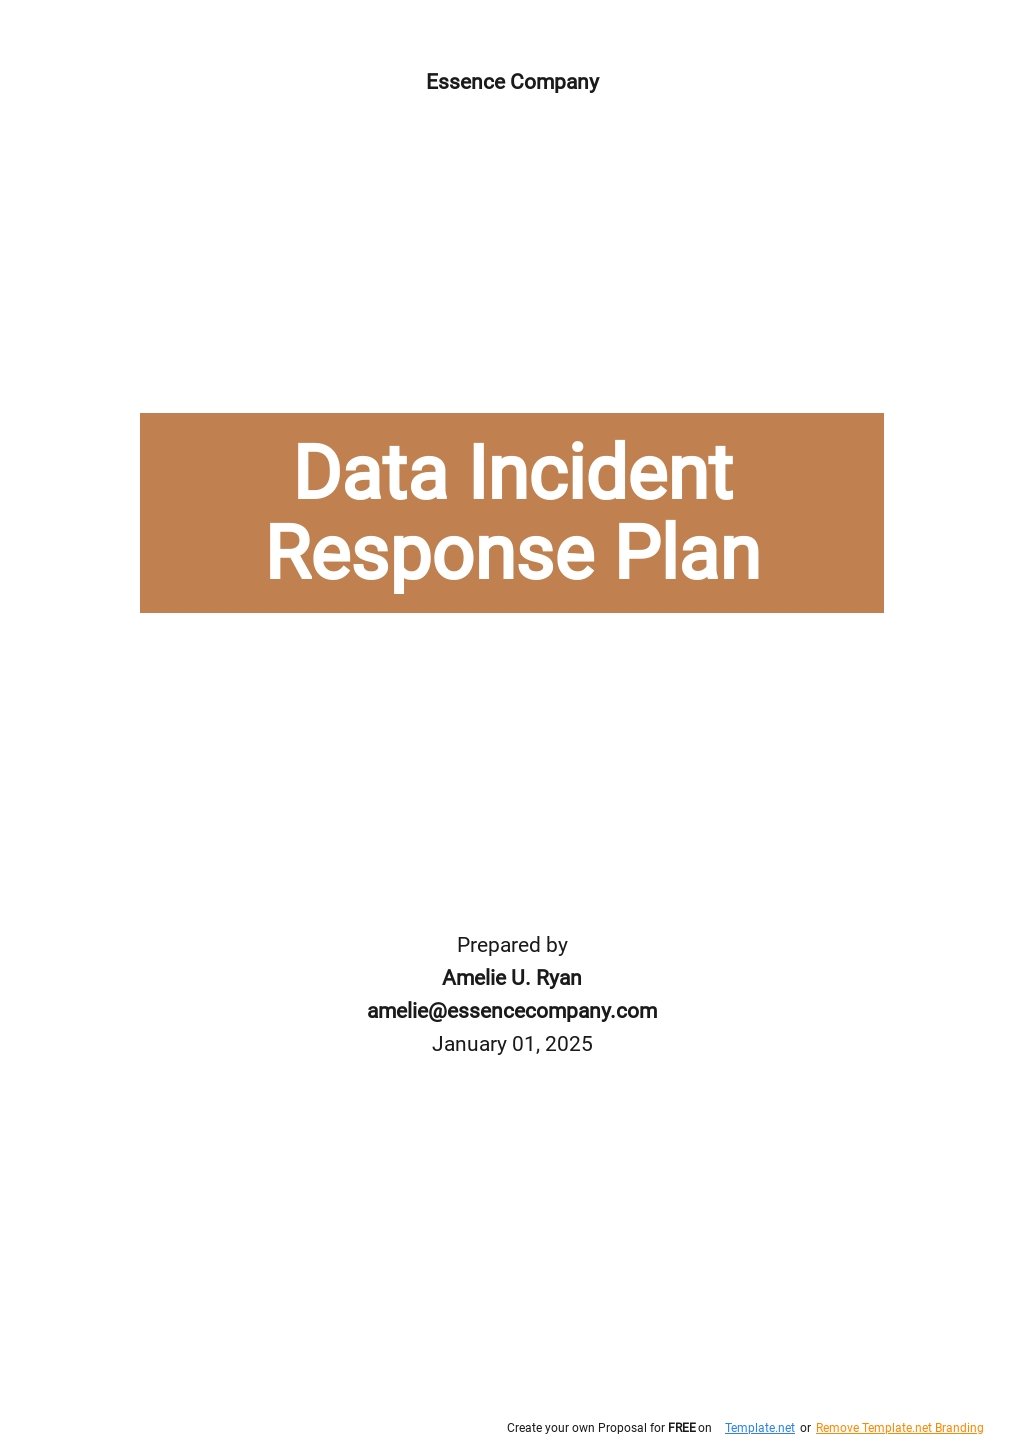 Data Incident Response Plan Template.jpe